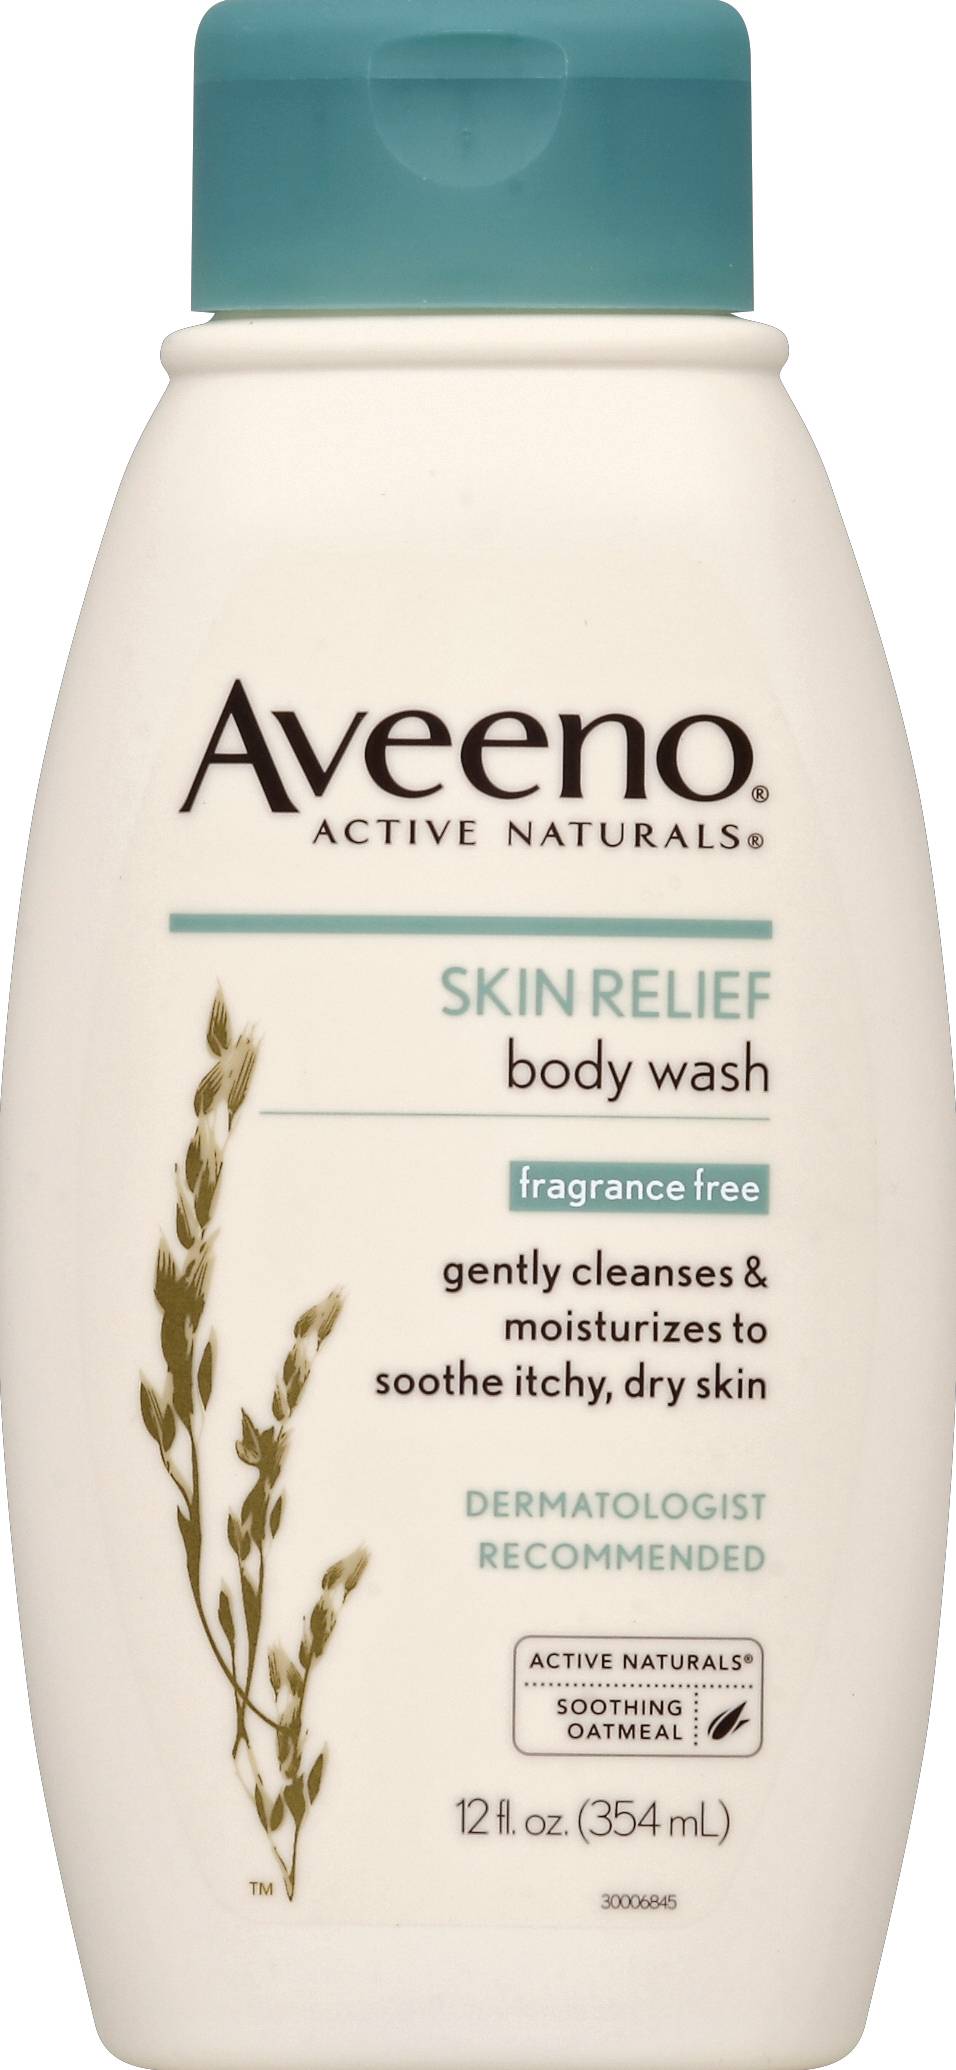 Aveeno Active Naturals Body Wash